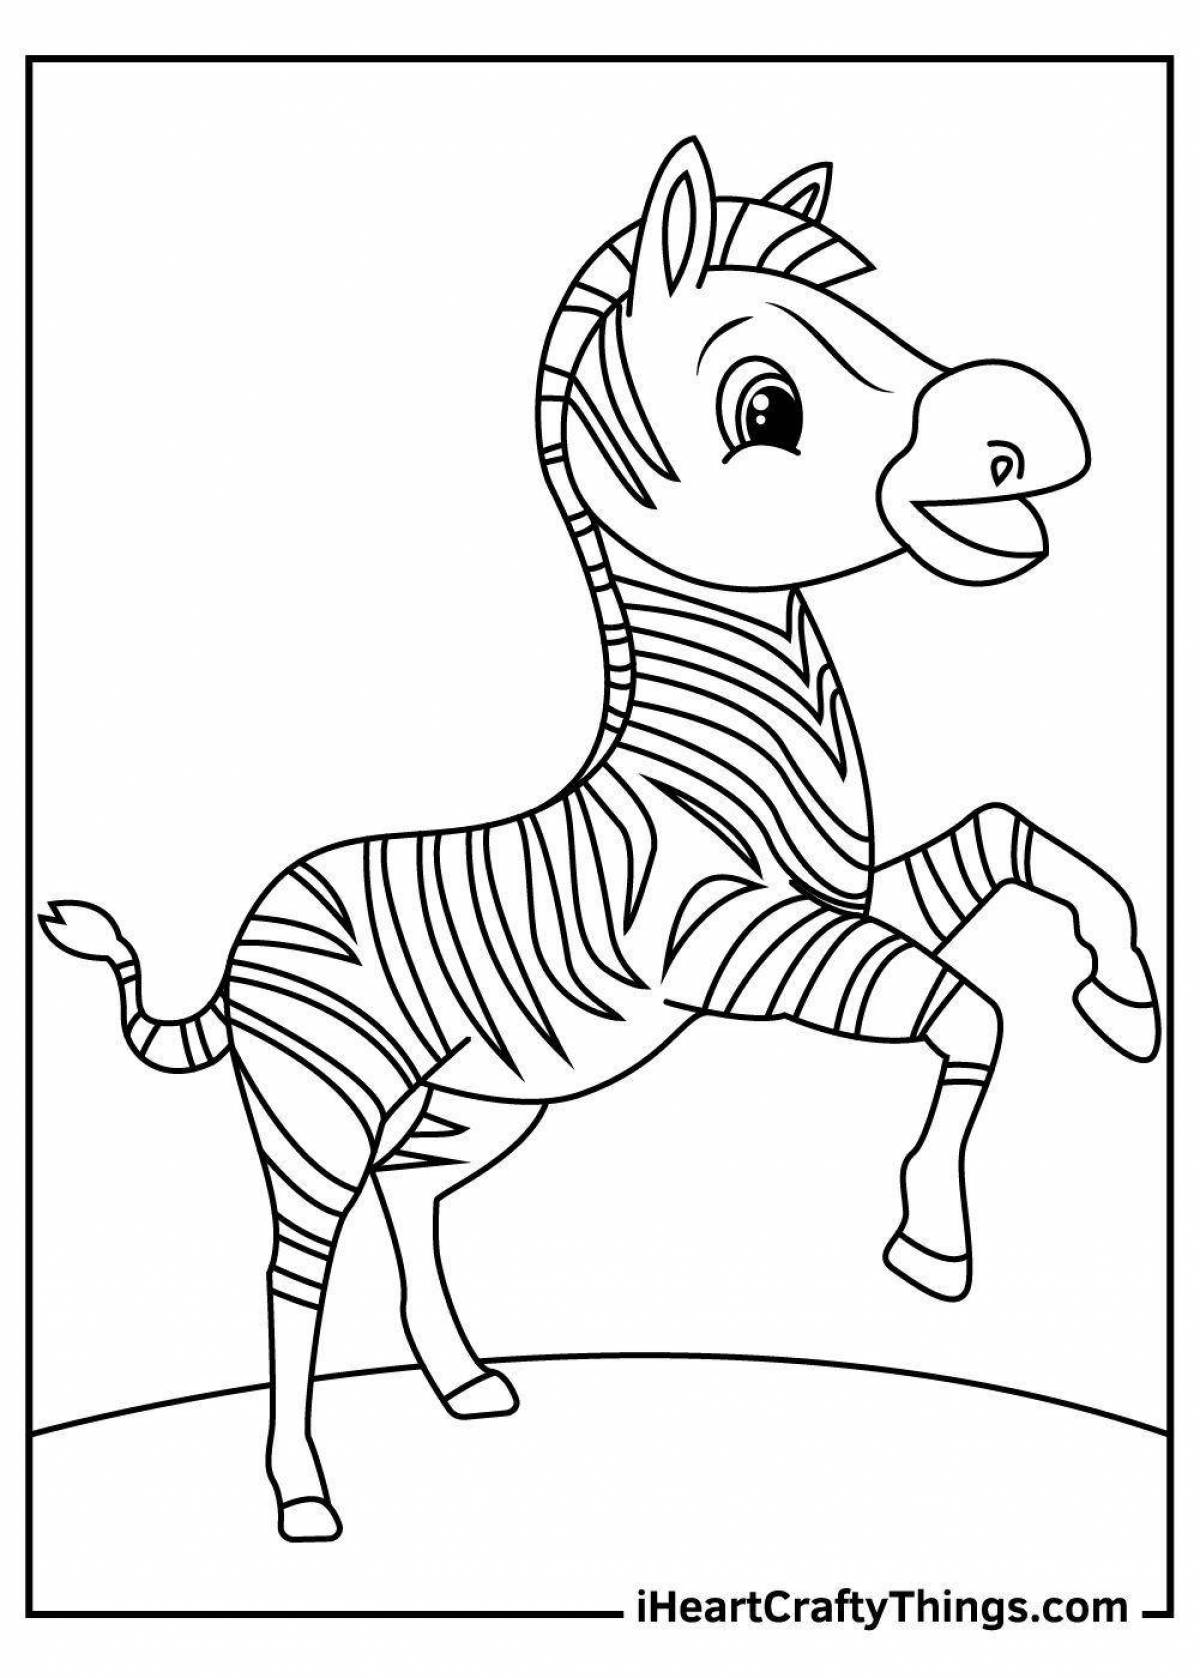 Great zebra coloring book for preschoolers 3-4 years old